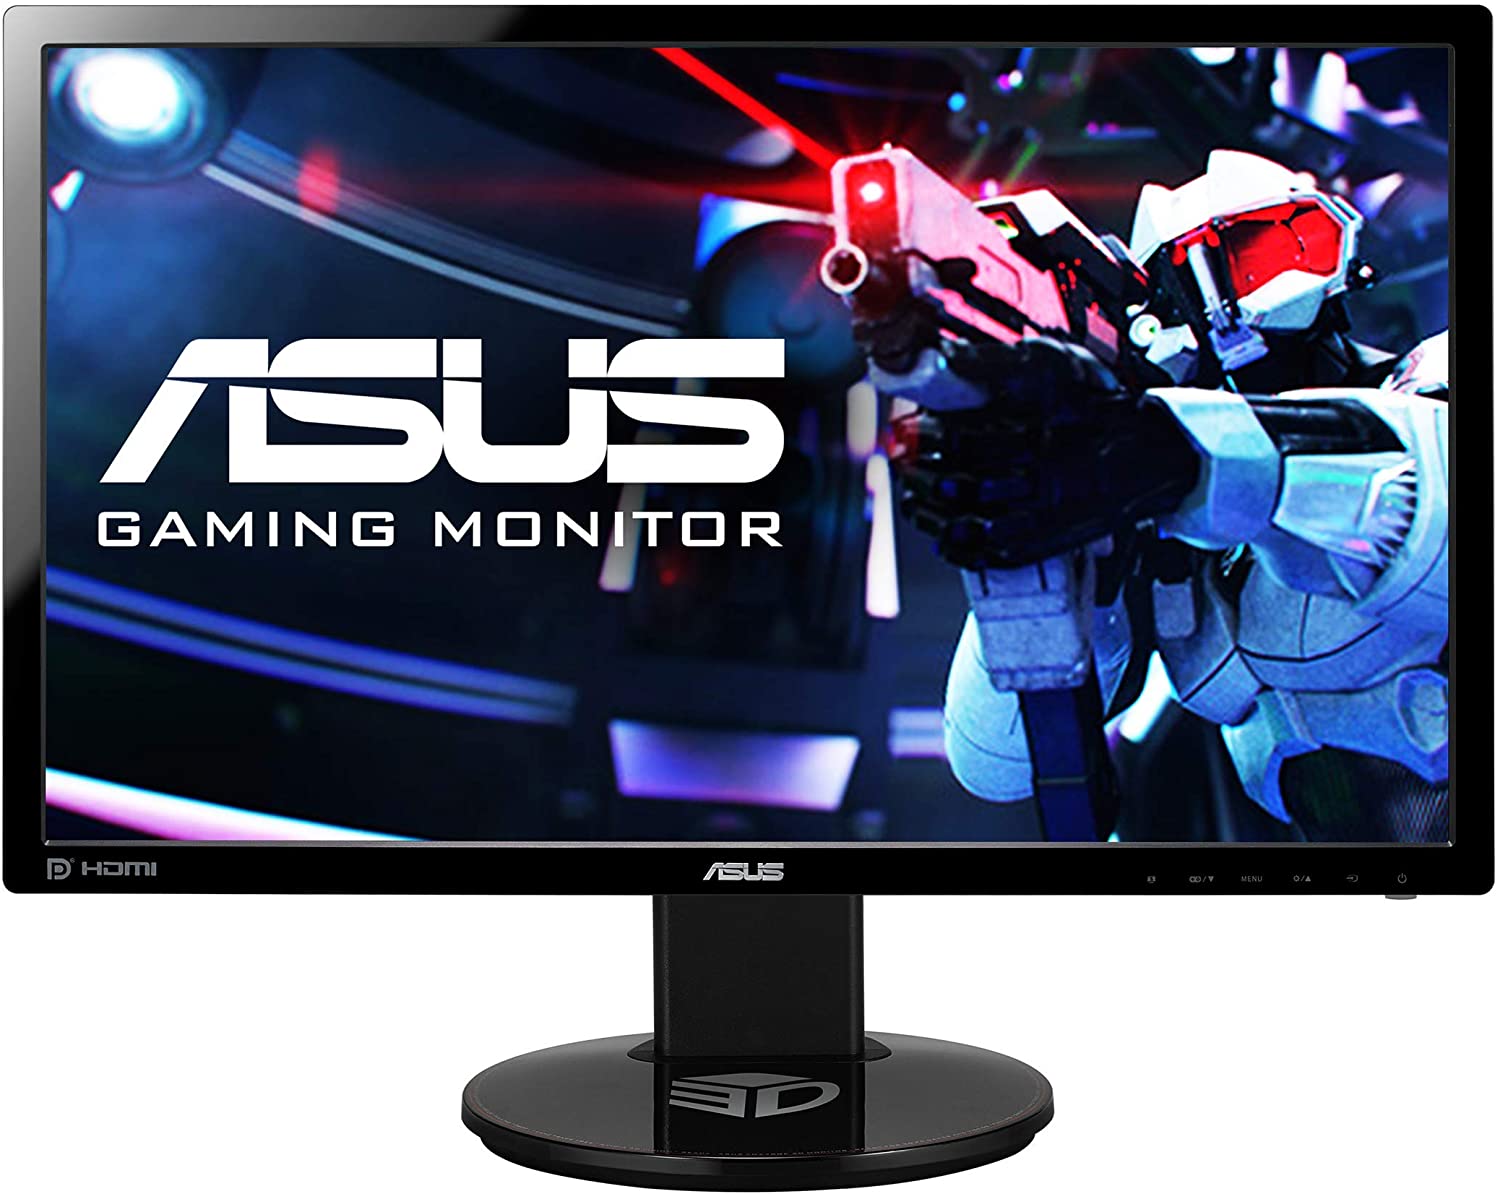 ASUS VG248QE 24" Full HD monitor